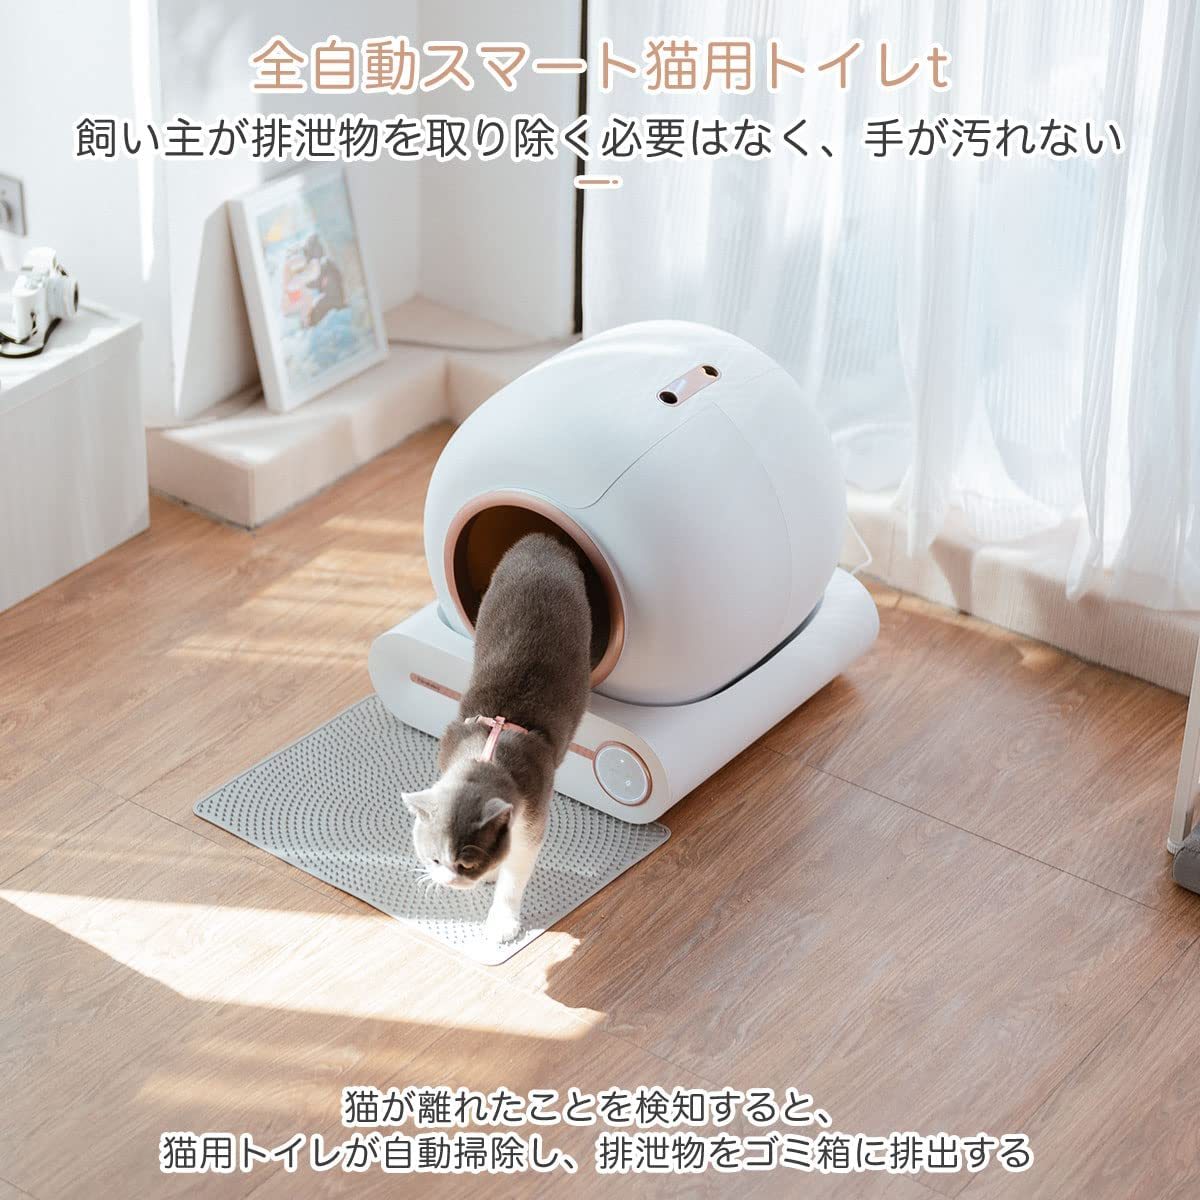 Pandaloli トイレ 猫 自動トイレ スマホ管理 センサー付き 飛散防止 自動掃除 専用APP IOS/Android対応の画像2